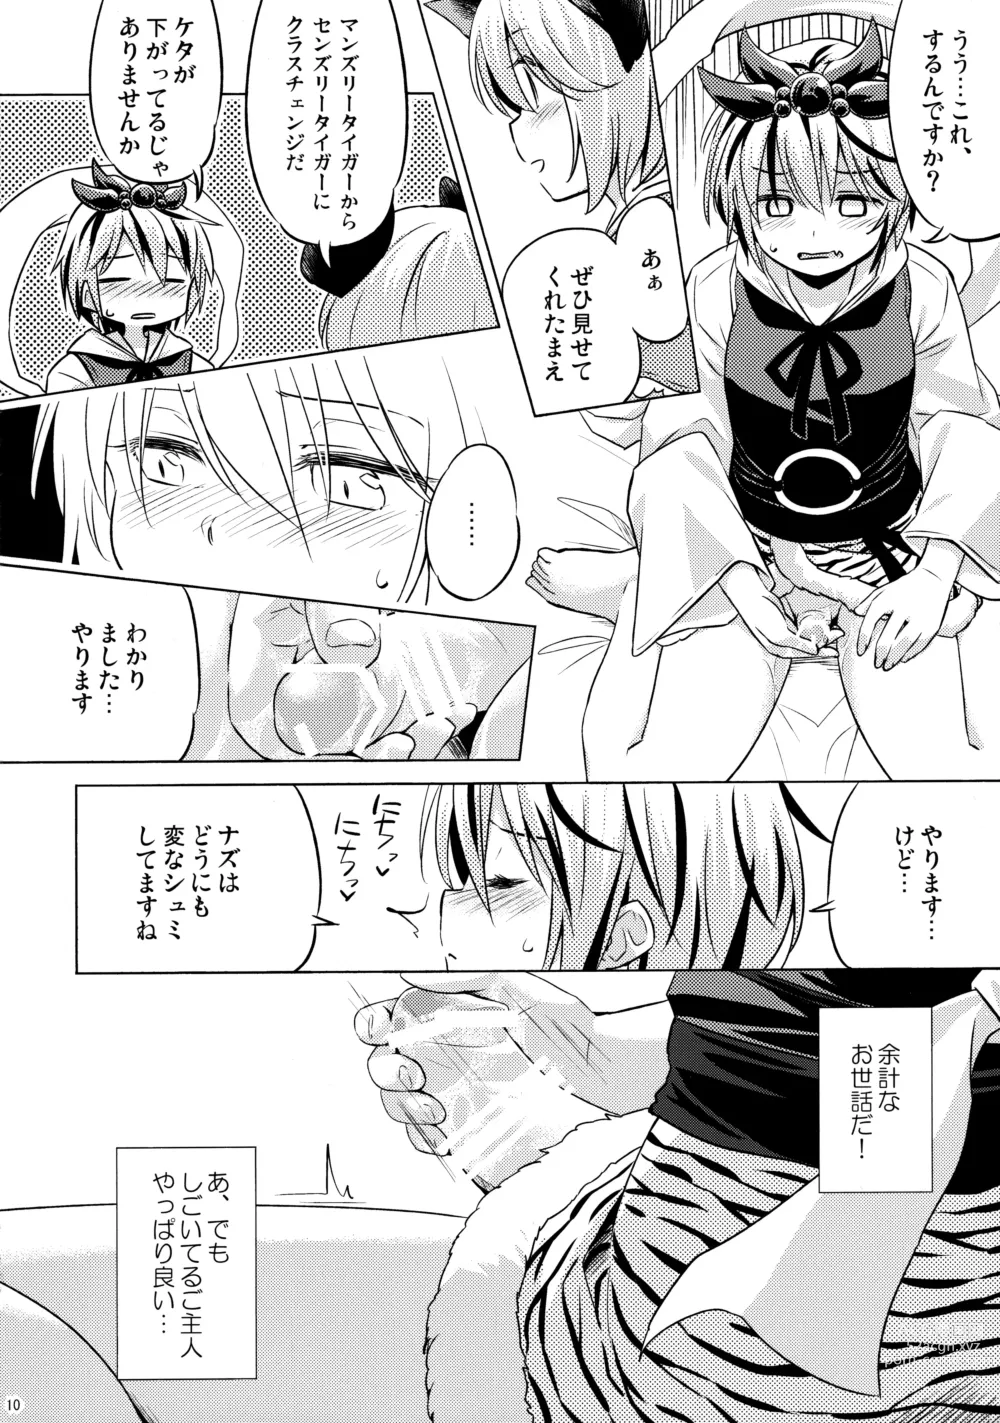 Page 9 of doujinshi Onazrin to Senzurii Tiger